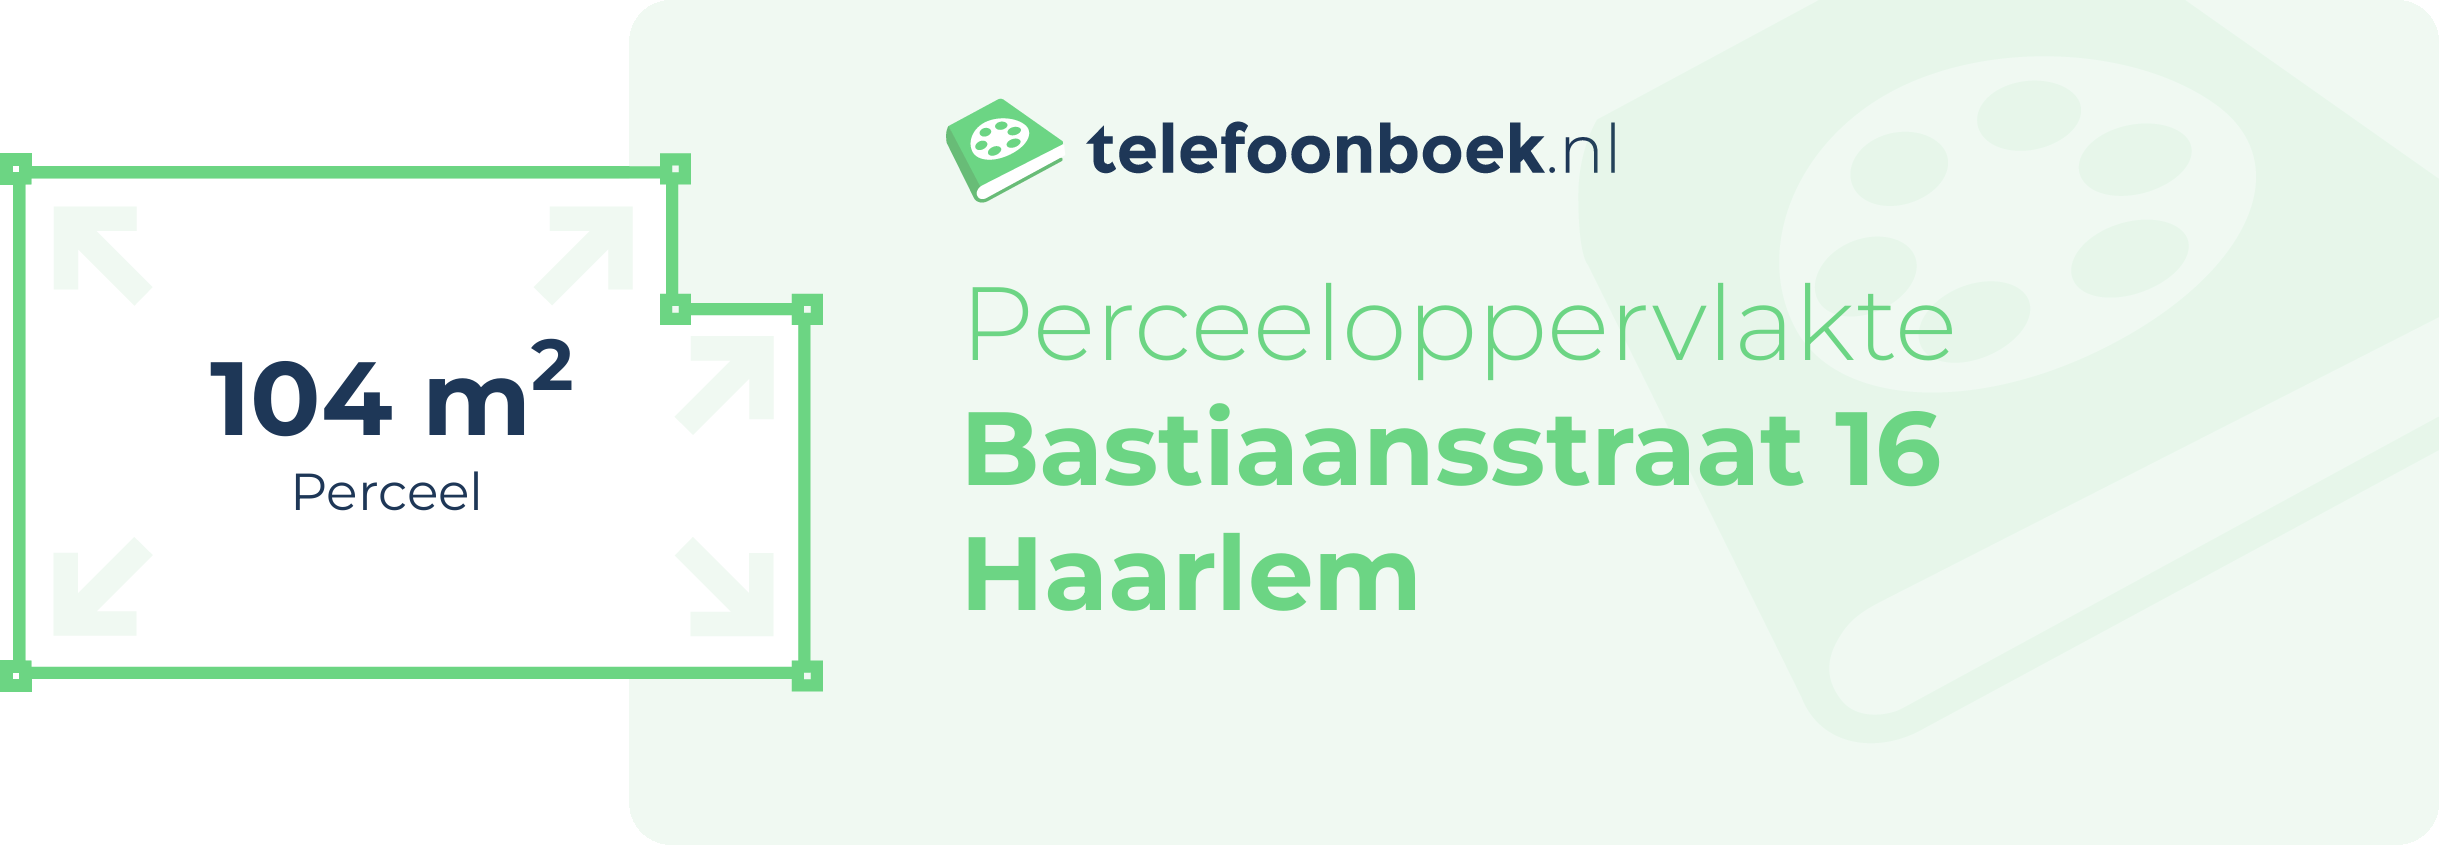 Perceeloppervlakte Bastiaansstraat 16 Haarlem